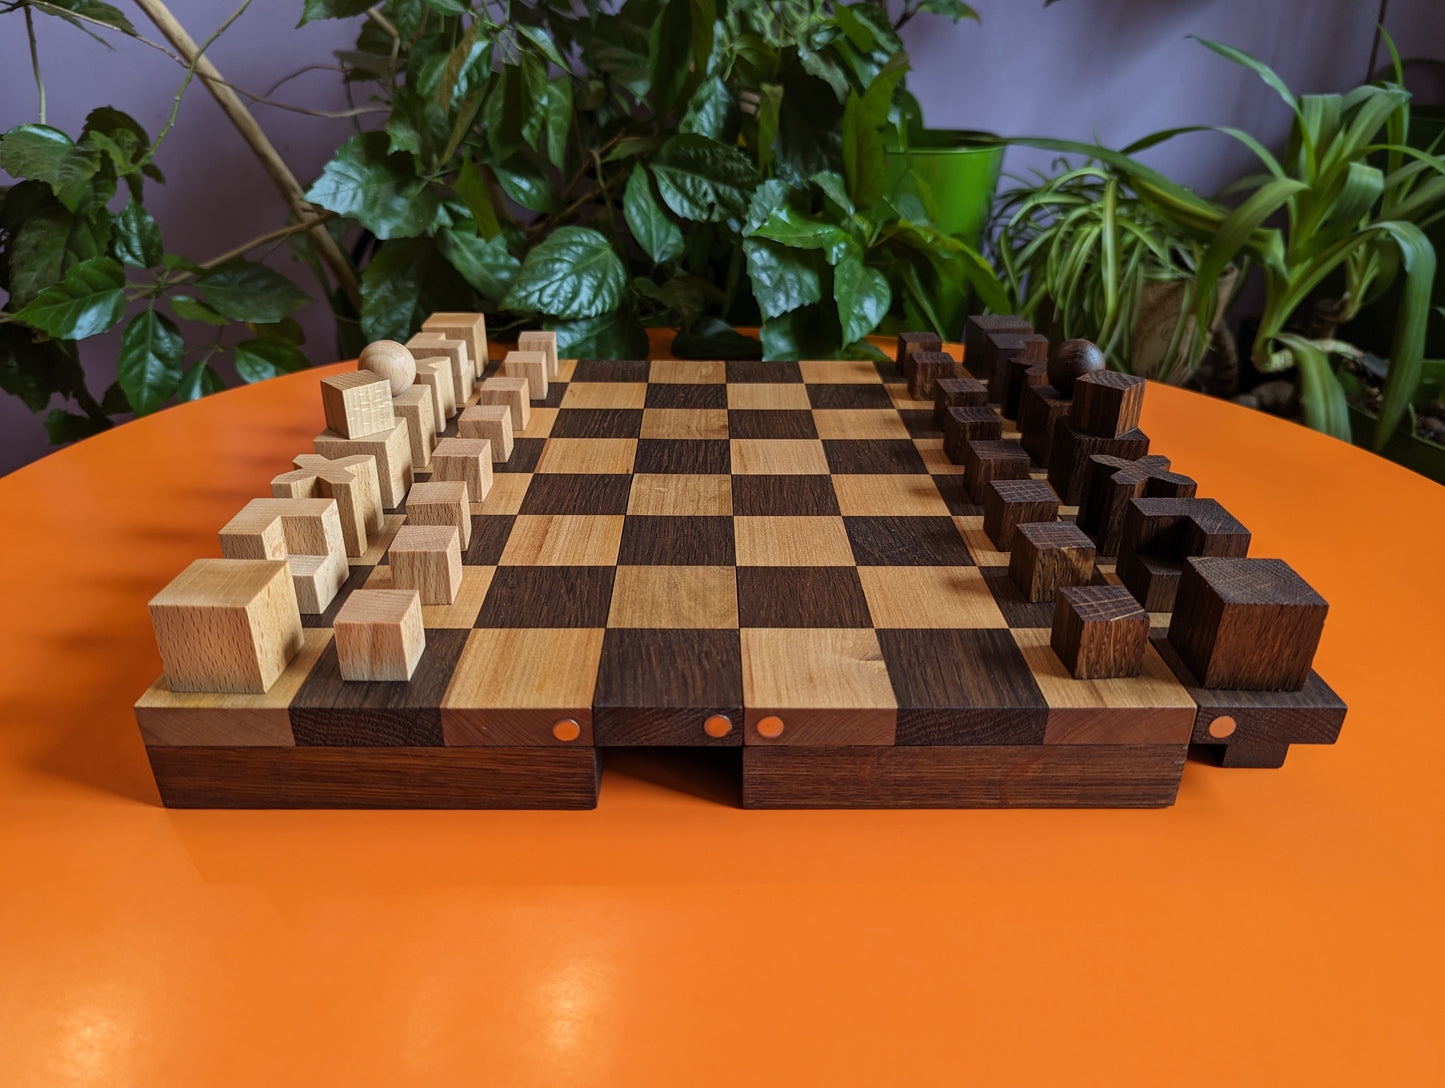 Portable Bauhaus Chess Set with Wooden Chessboard/Chessbox. Handmade.